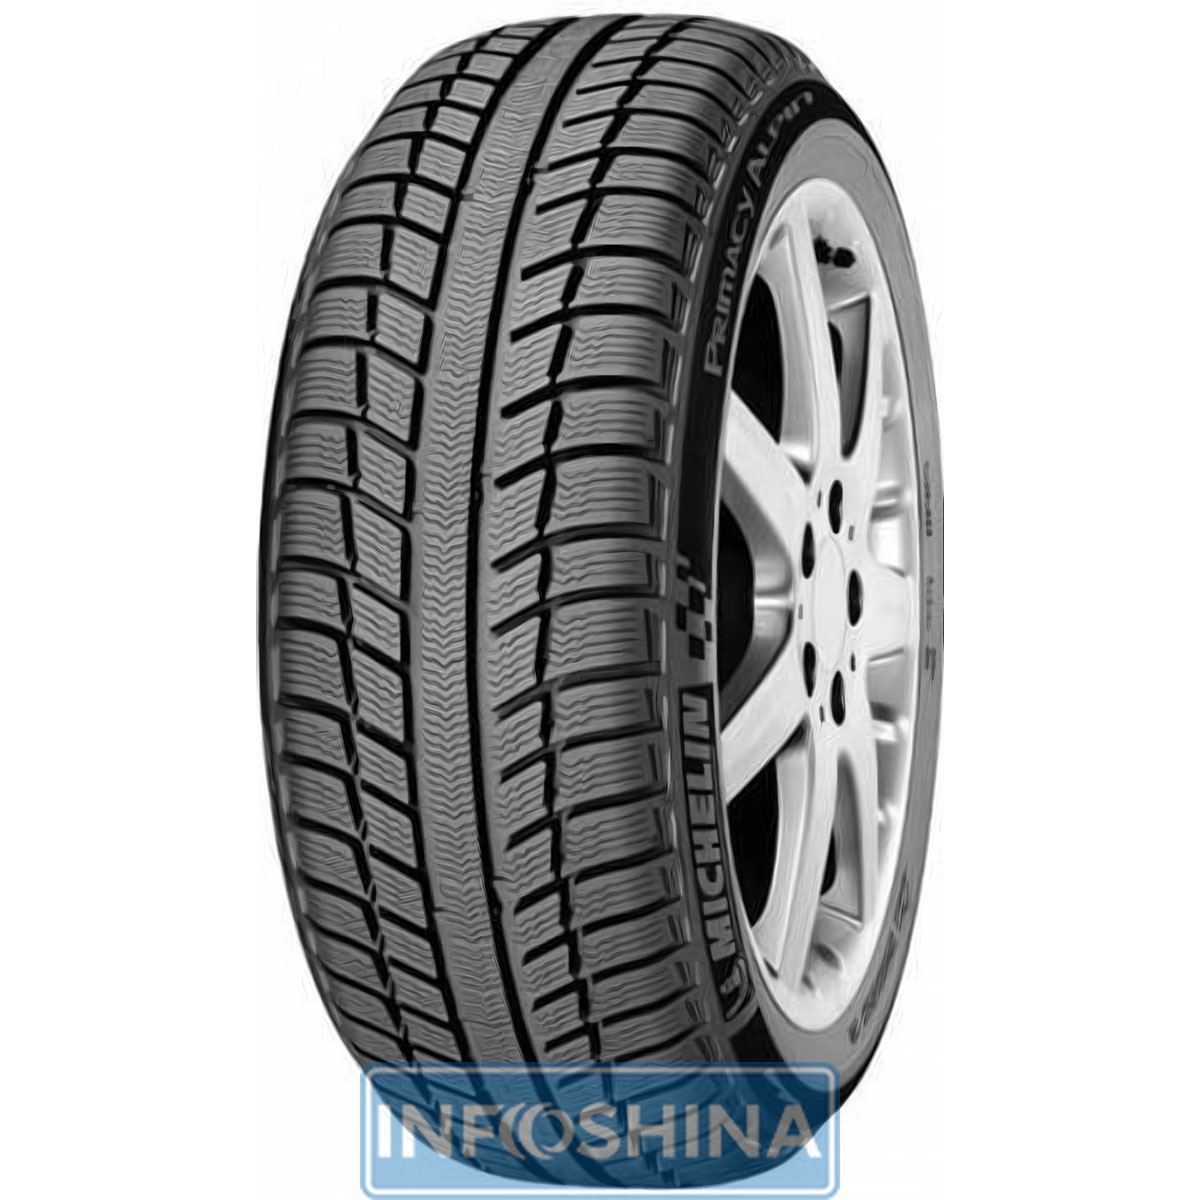 Купить шины Michelin Primacy Alpin 3 225/50 R17 98H